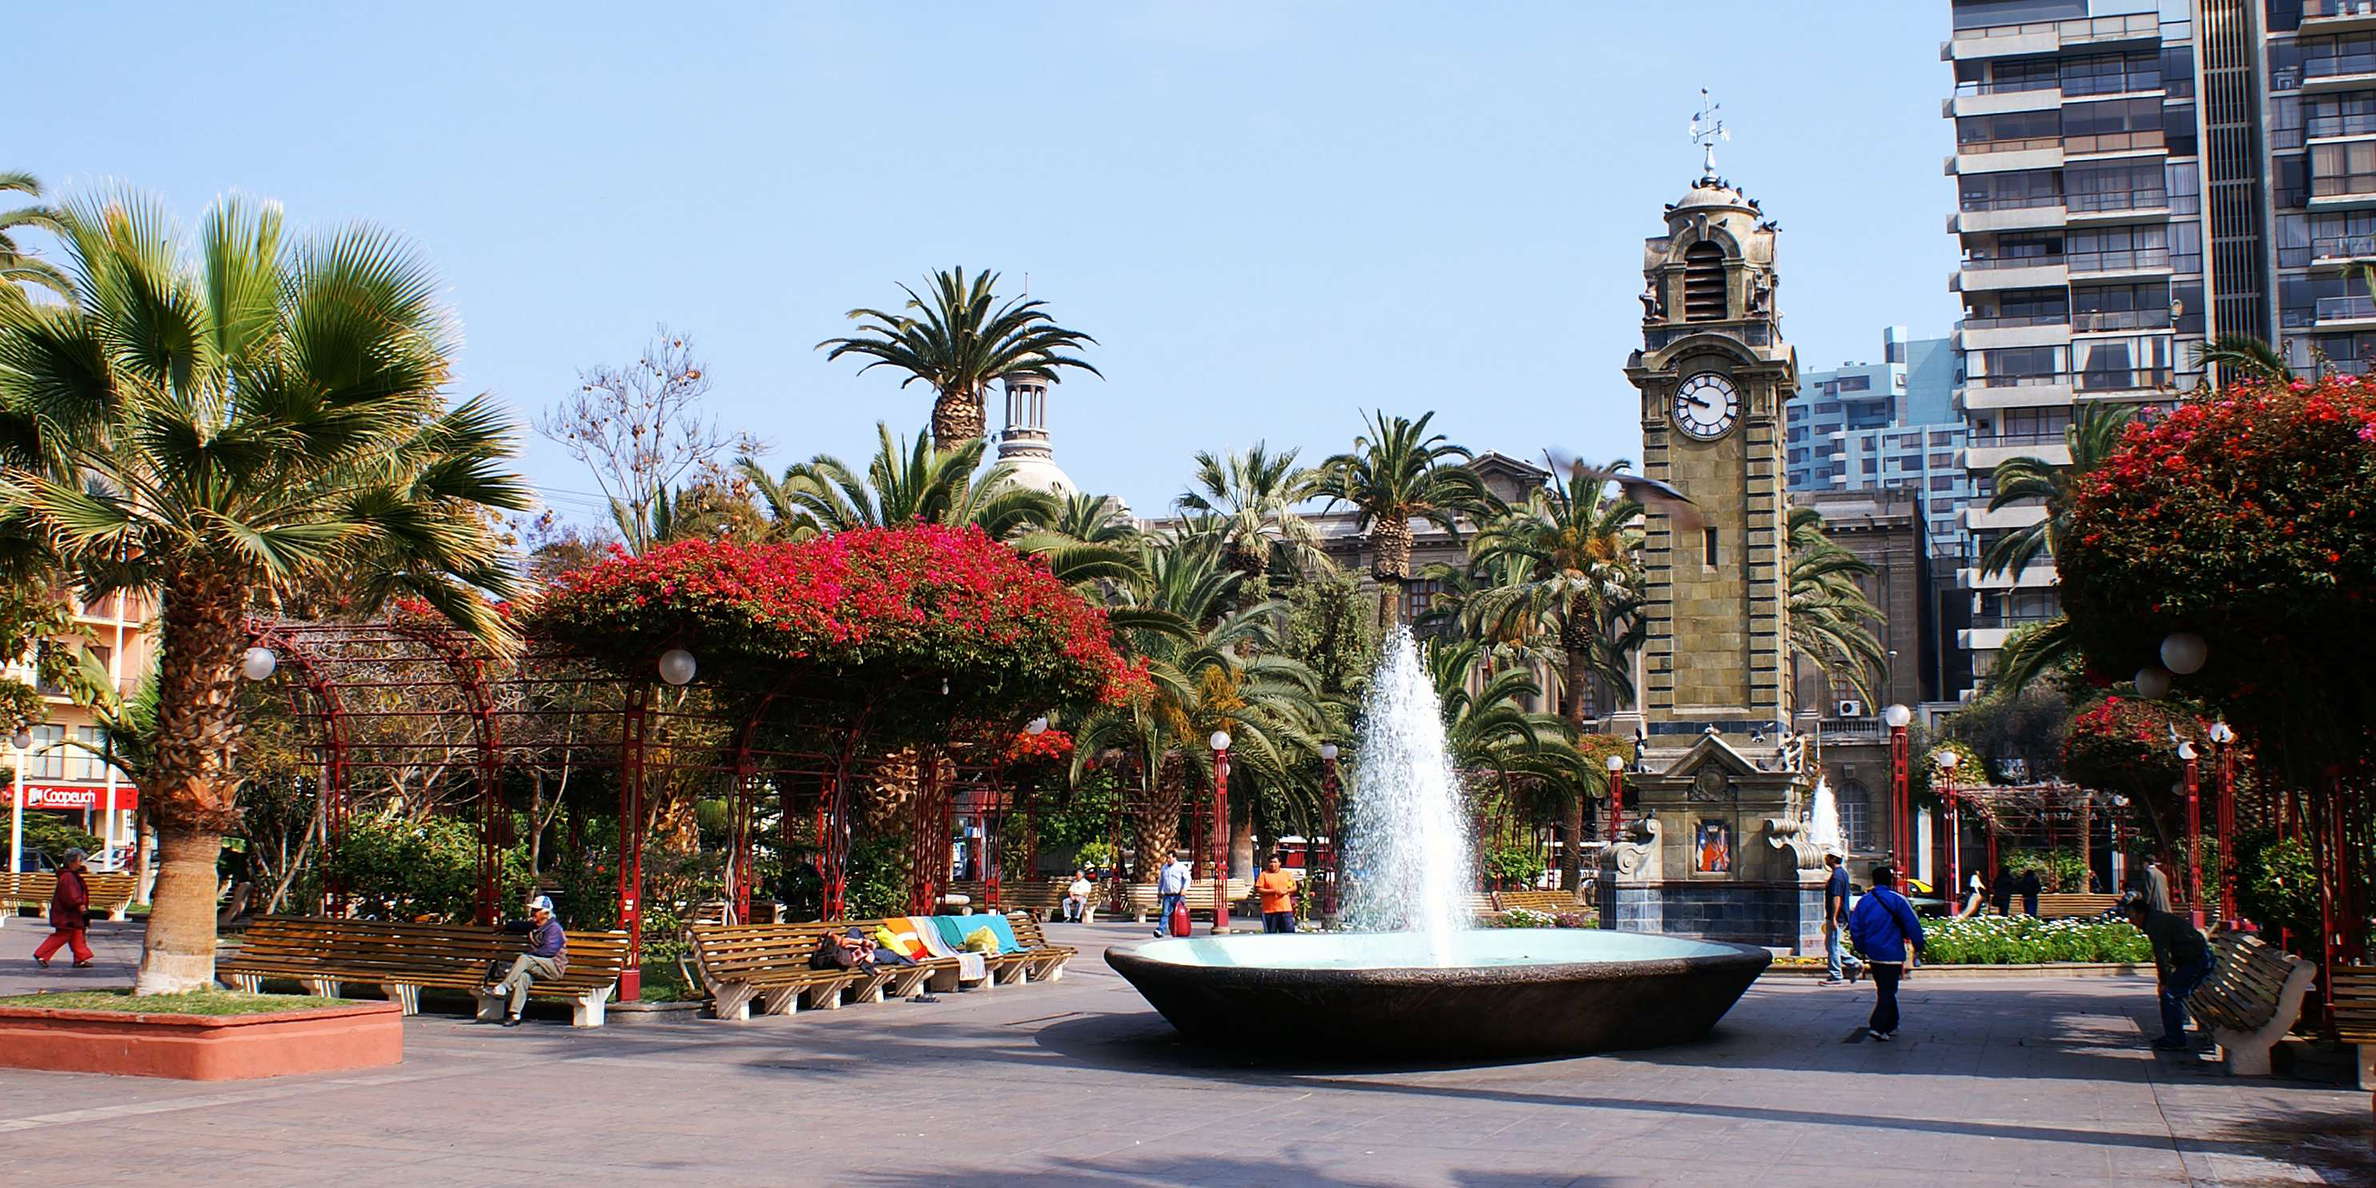 Antofagasta | Plaza Colón with clock tower